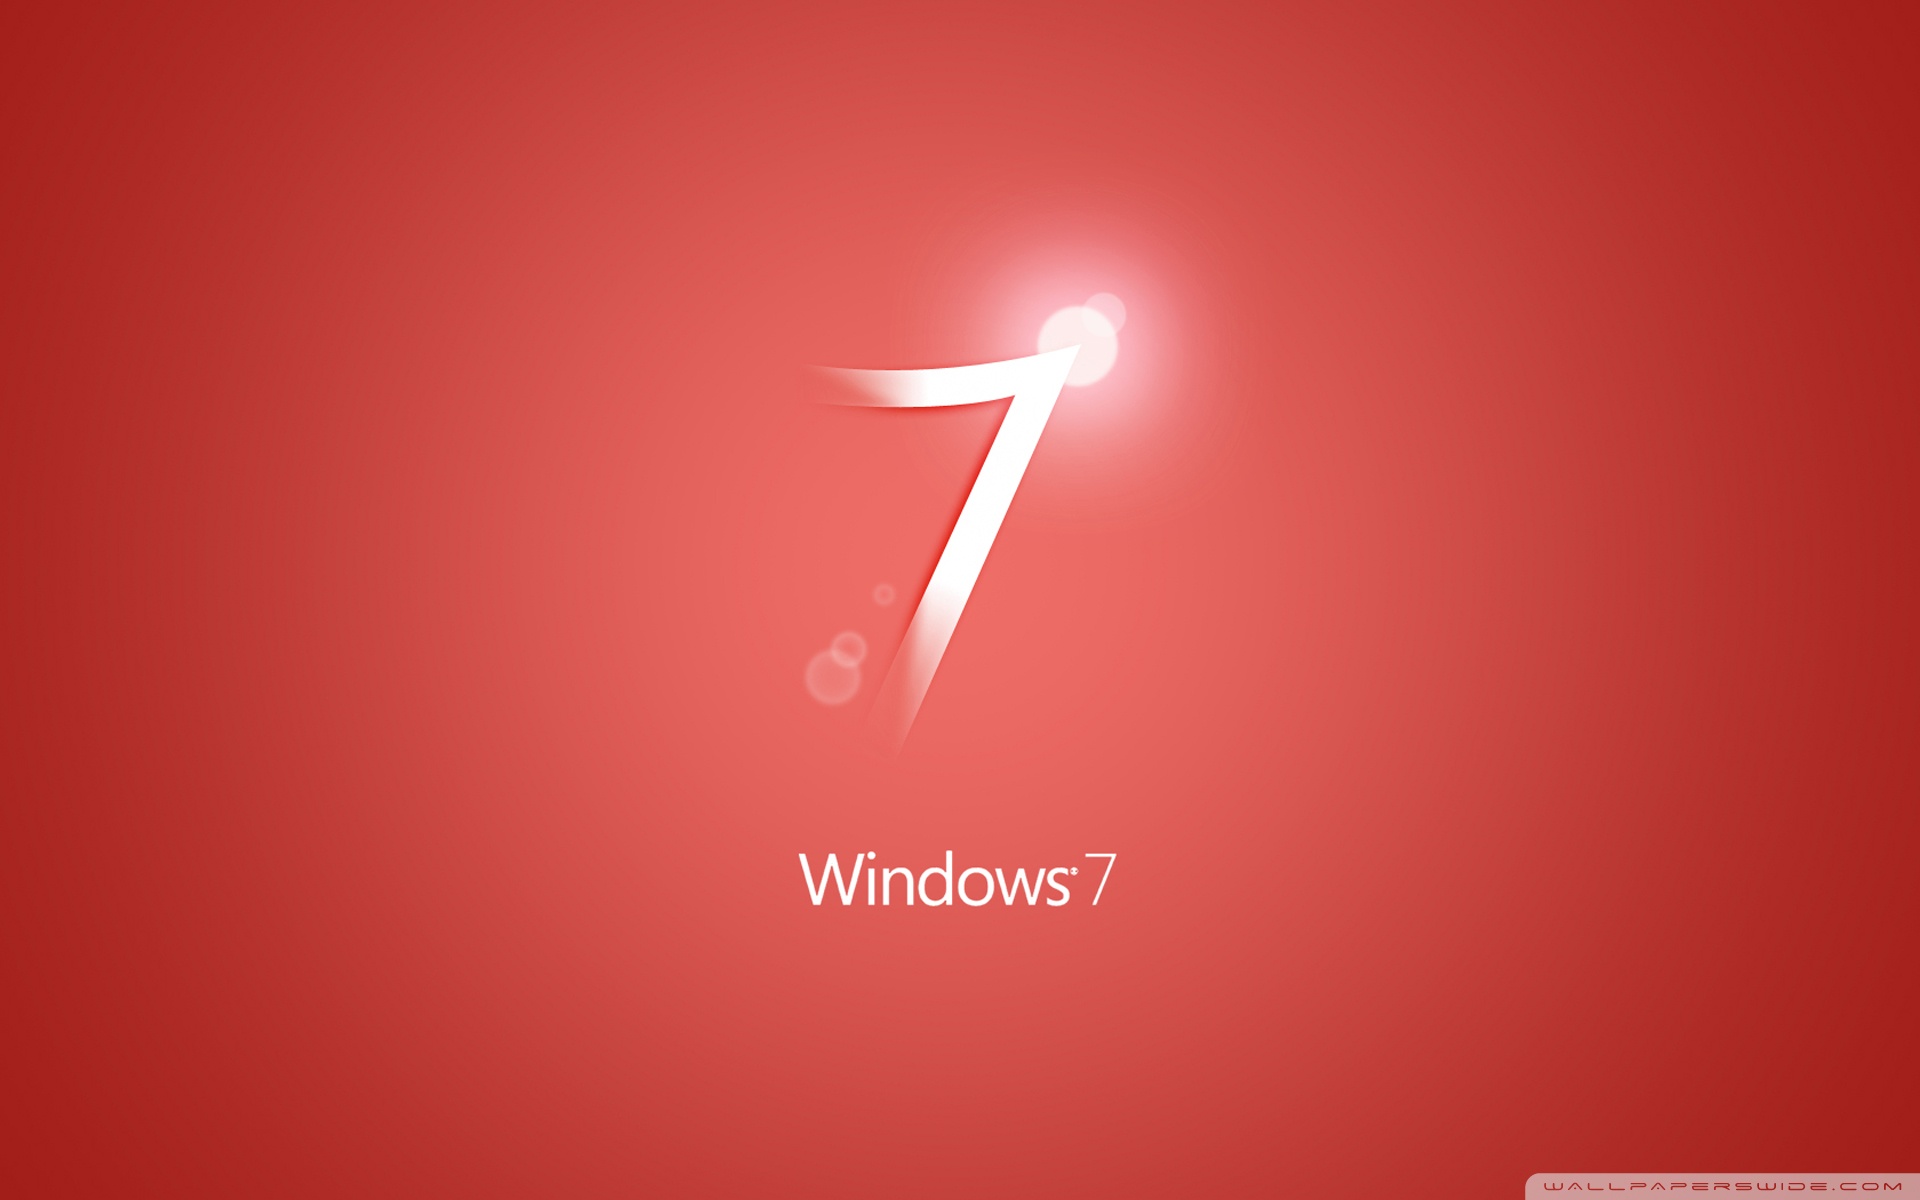 Windows 7 Red Ultra HD Desktop Background Wallpaper for 4K UHD TV, Widescreen & UltraWide Desktop & Laptop